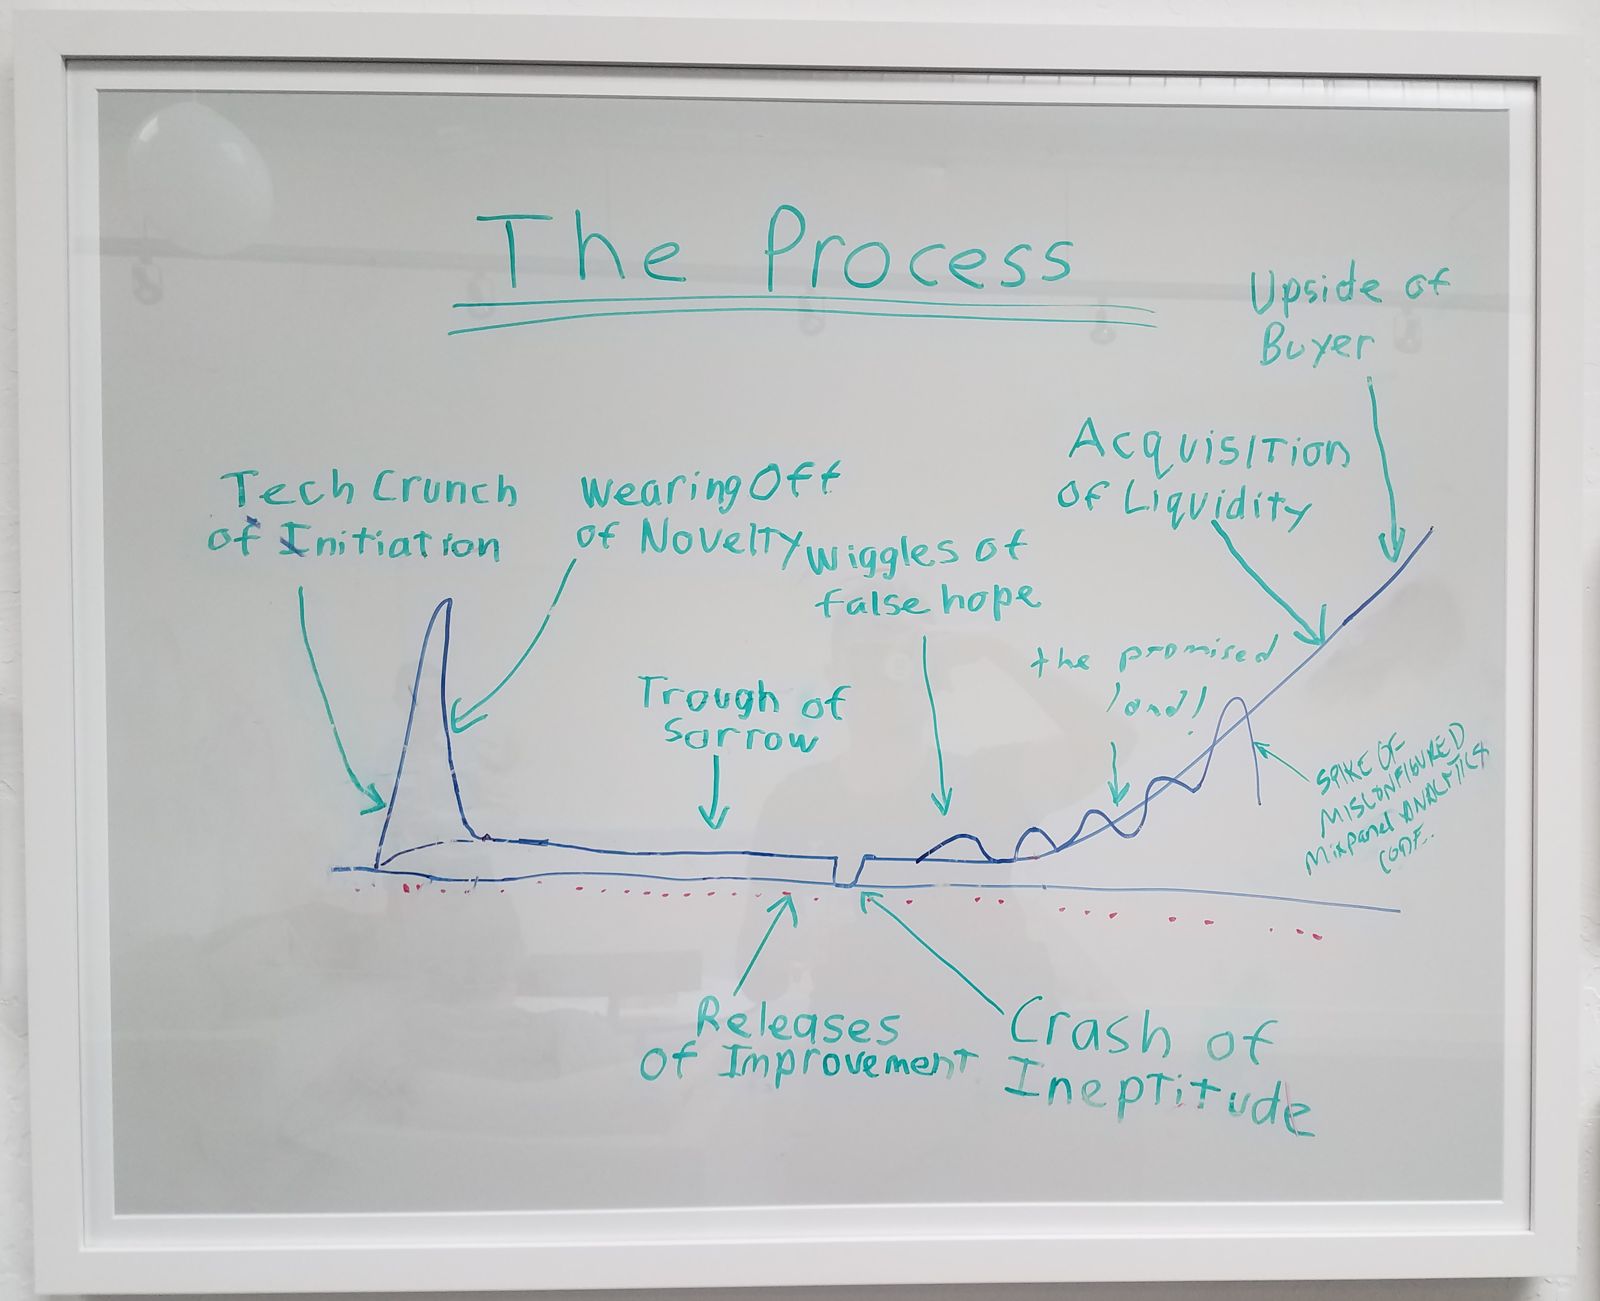 The Process